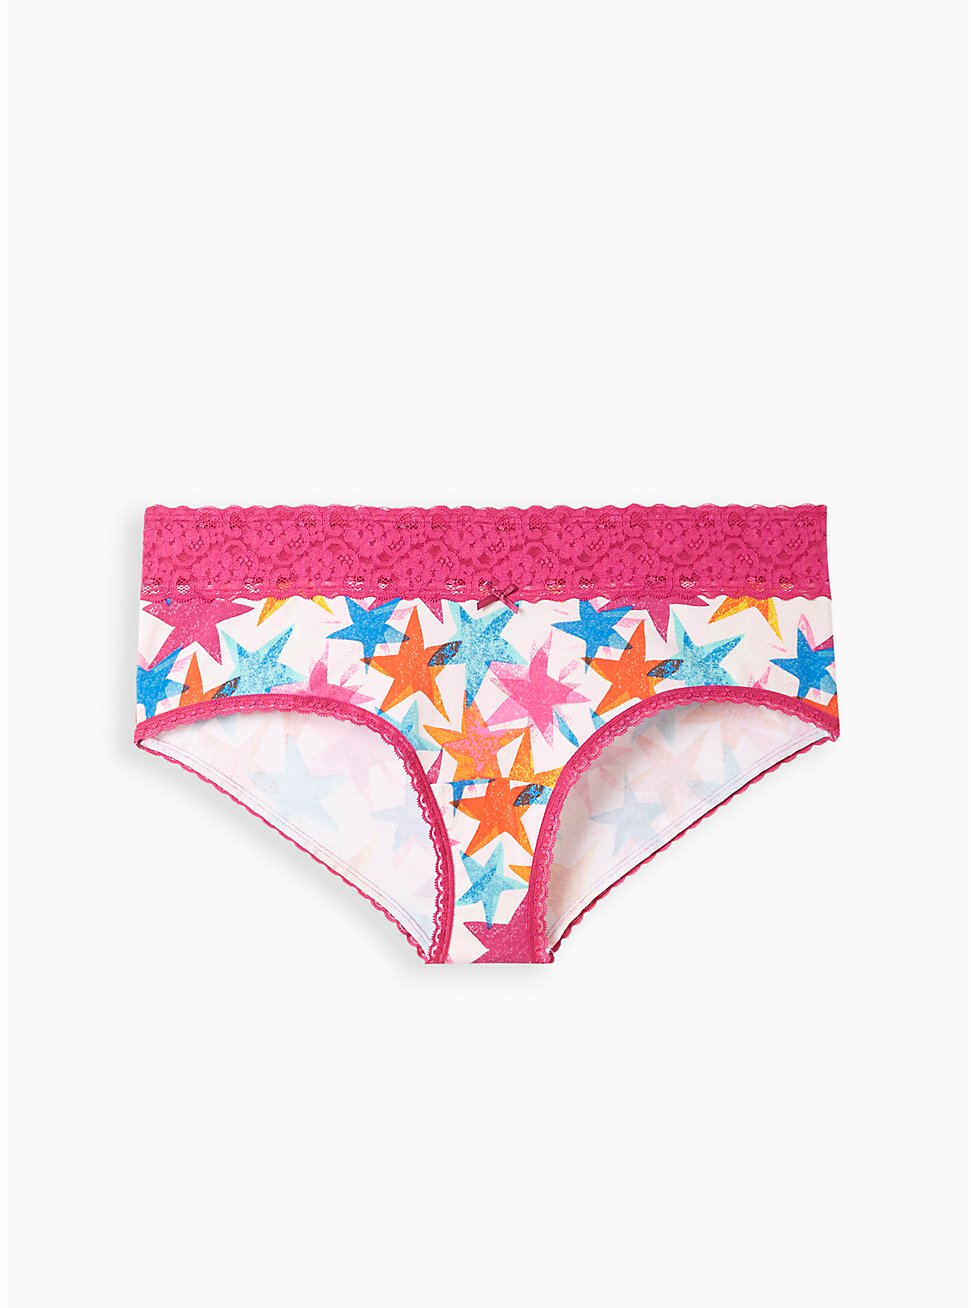 Plus Size Cotton Mid-Rise Cheeky Lace Trim Panty, PINK FLOW STAR, hi-res